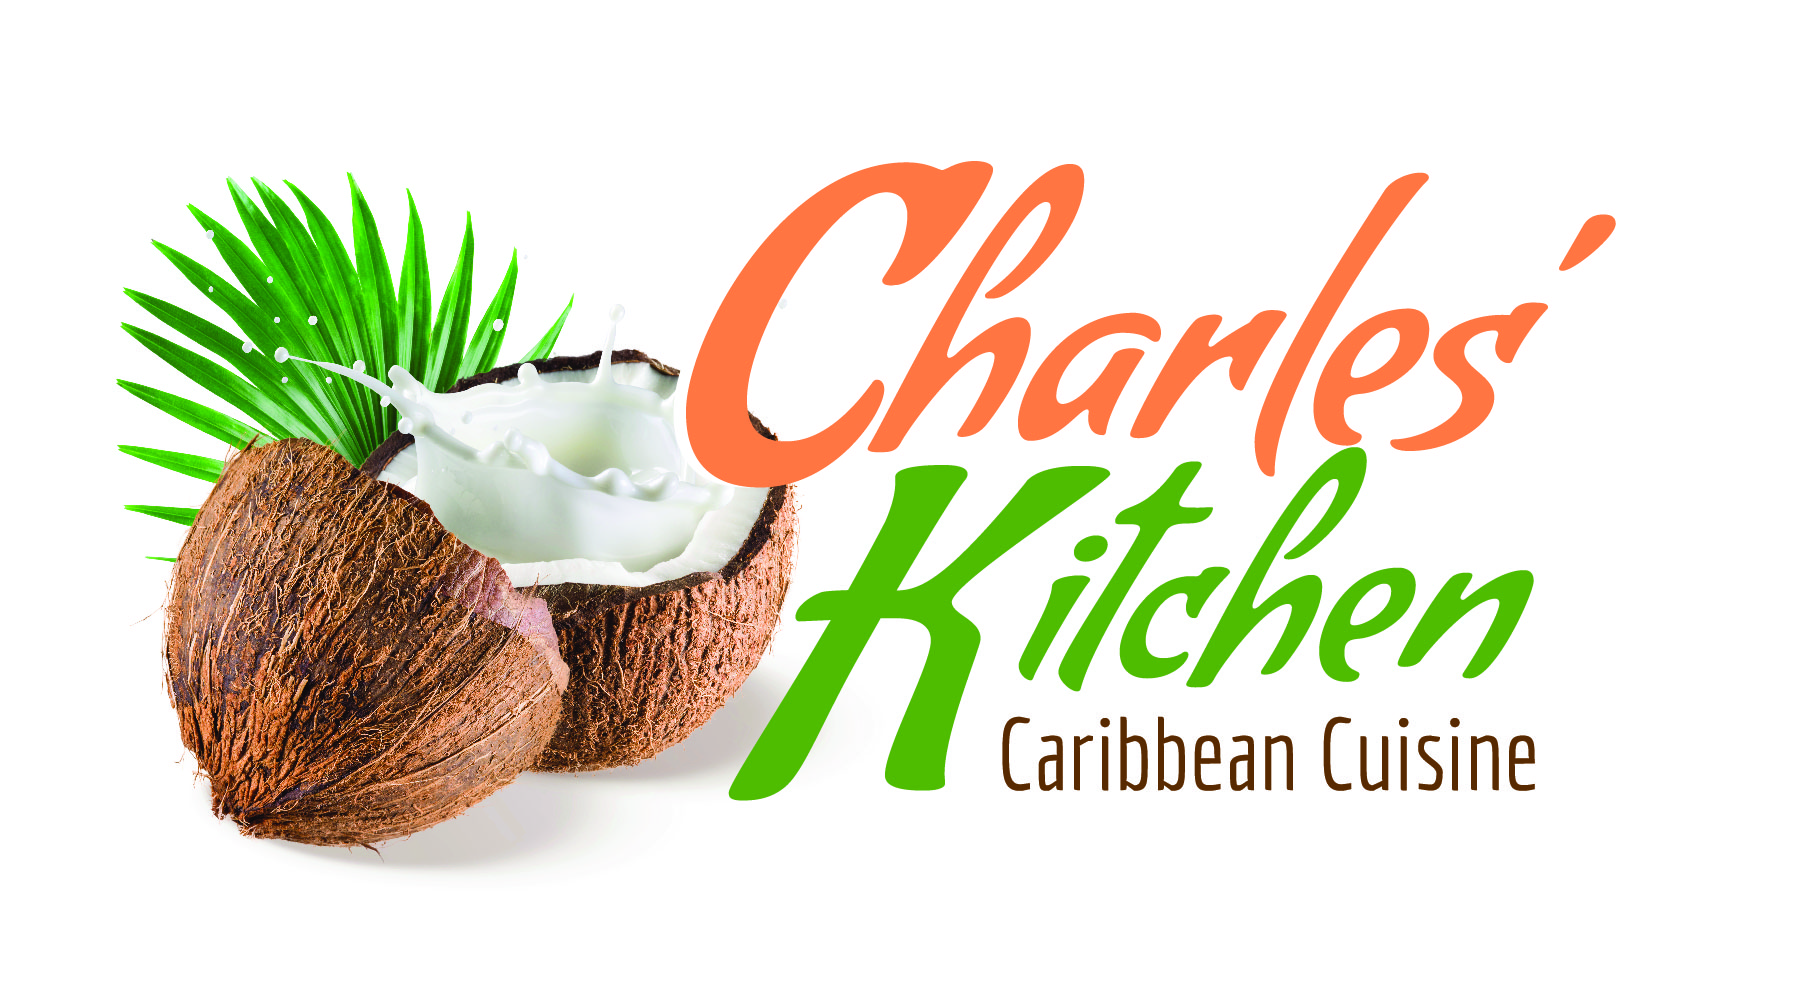 Charles Kitchen Caribbean Cuisine